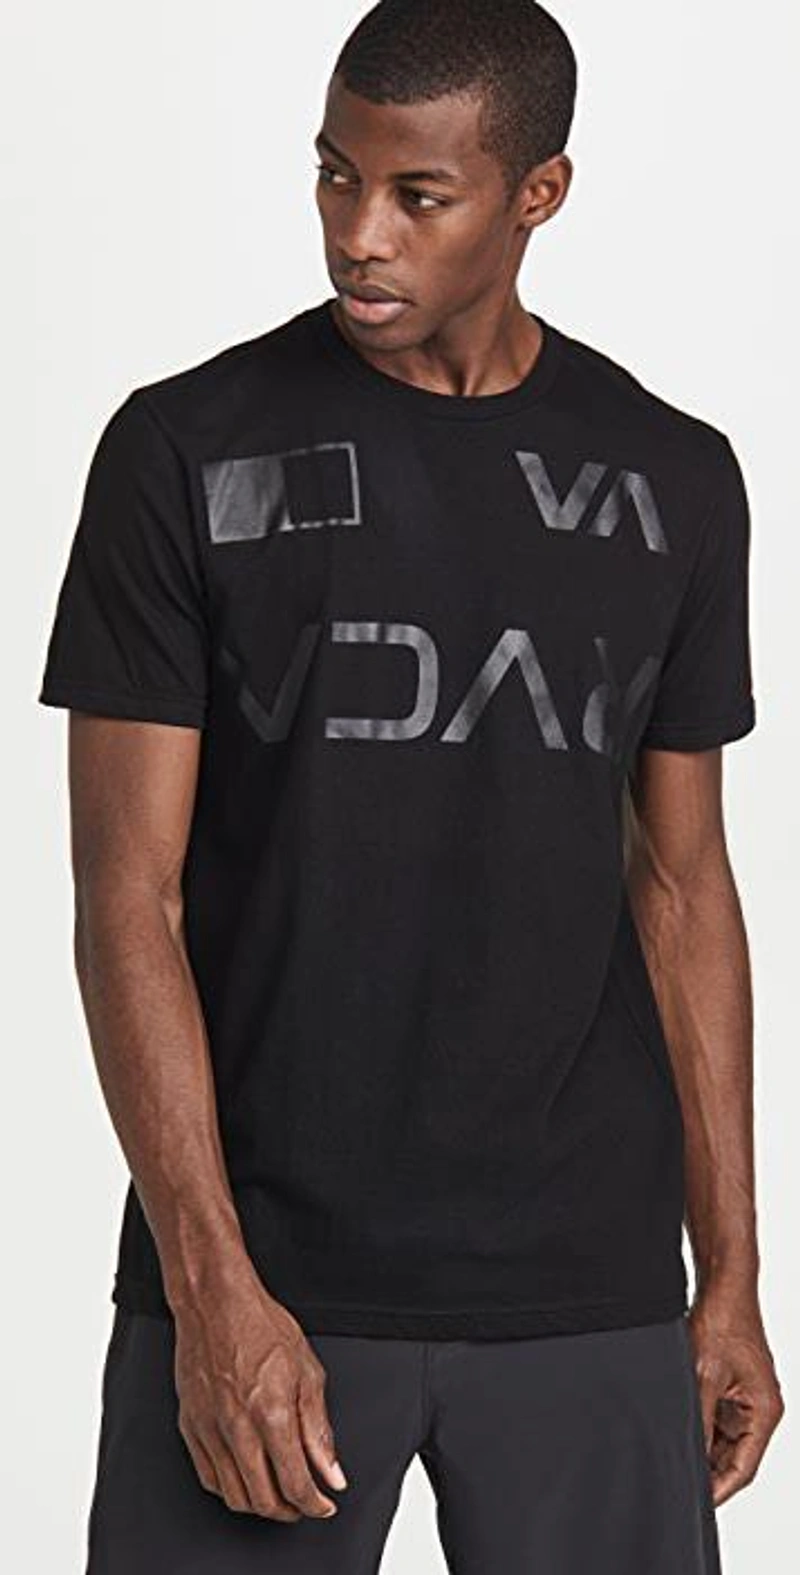 shopbop.com's Posts | 搭配: Rvca Sport Billboard Tee In Black；Rhone Versatility Performance Athletic Shorts In Multicolour